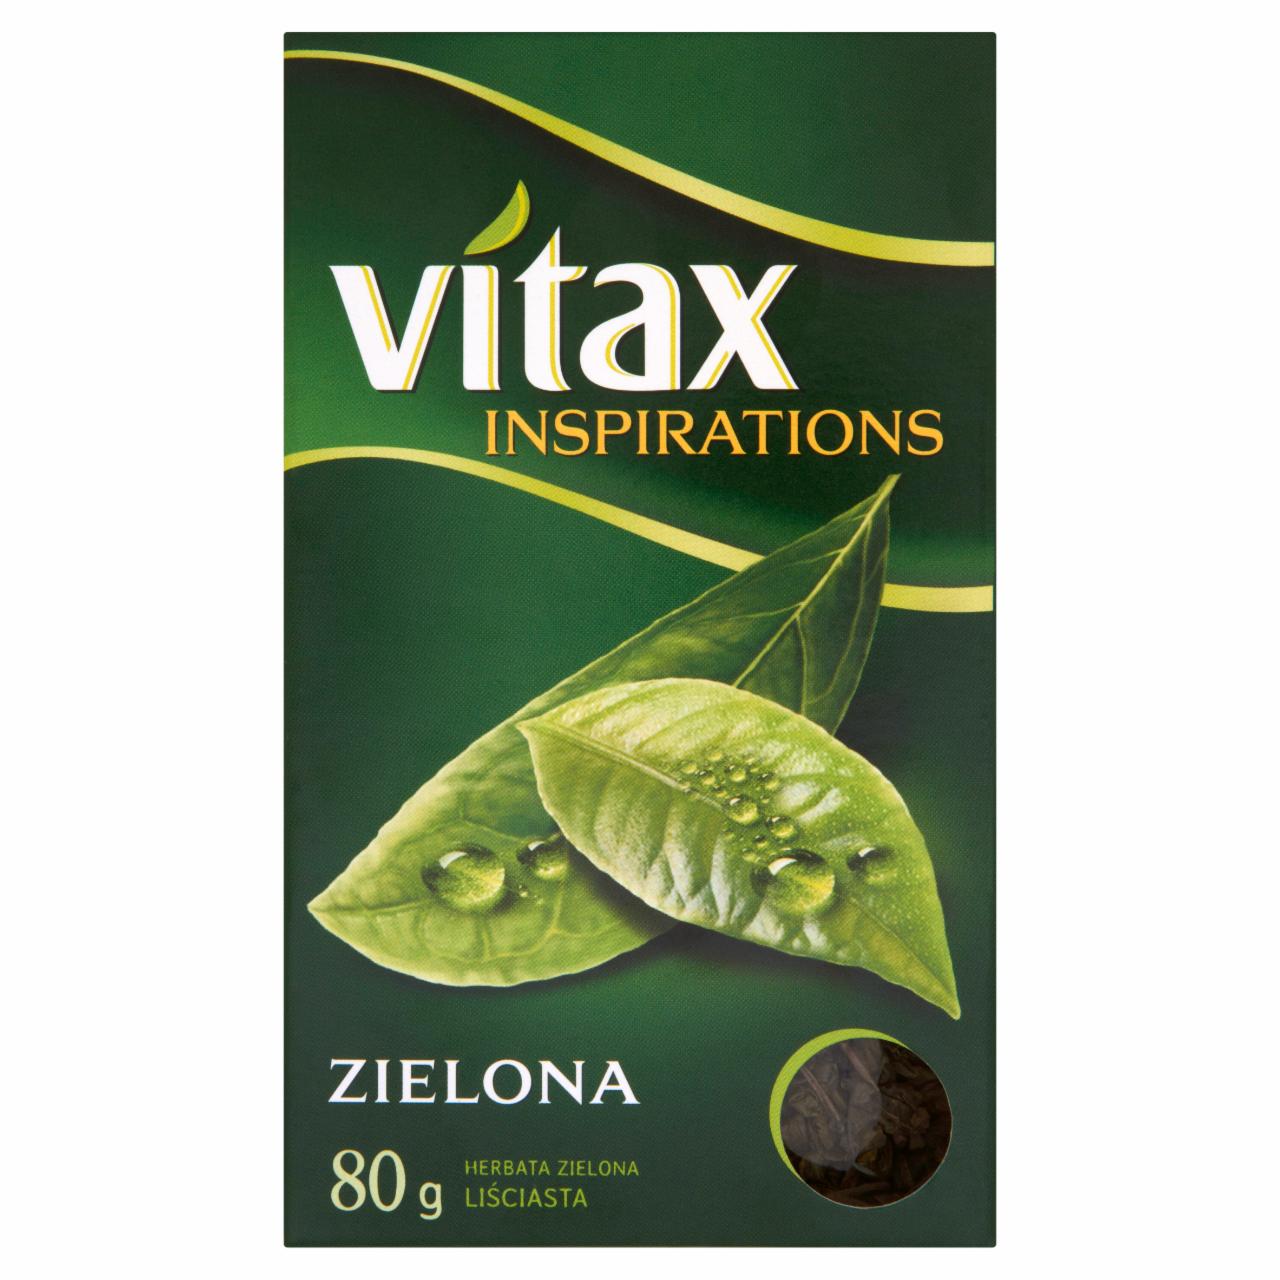 Zdjęcia - Vitax Inspirations Zielona Herbata liściasta 80 g